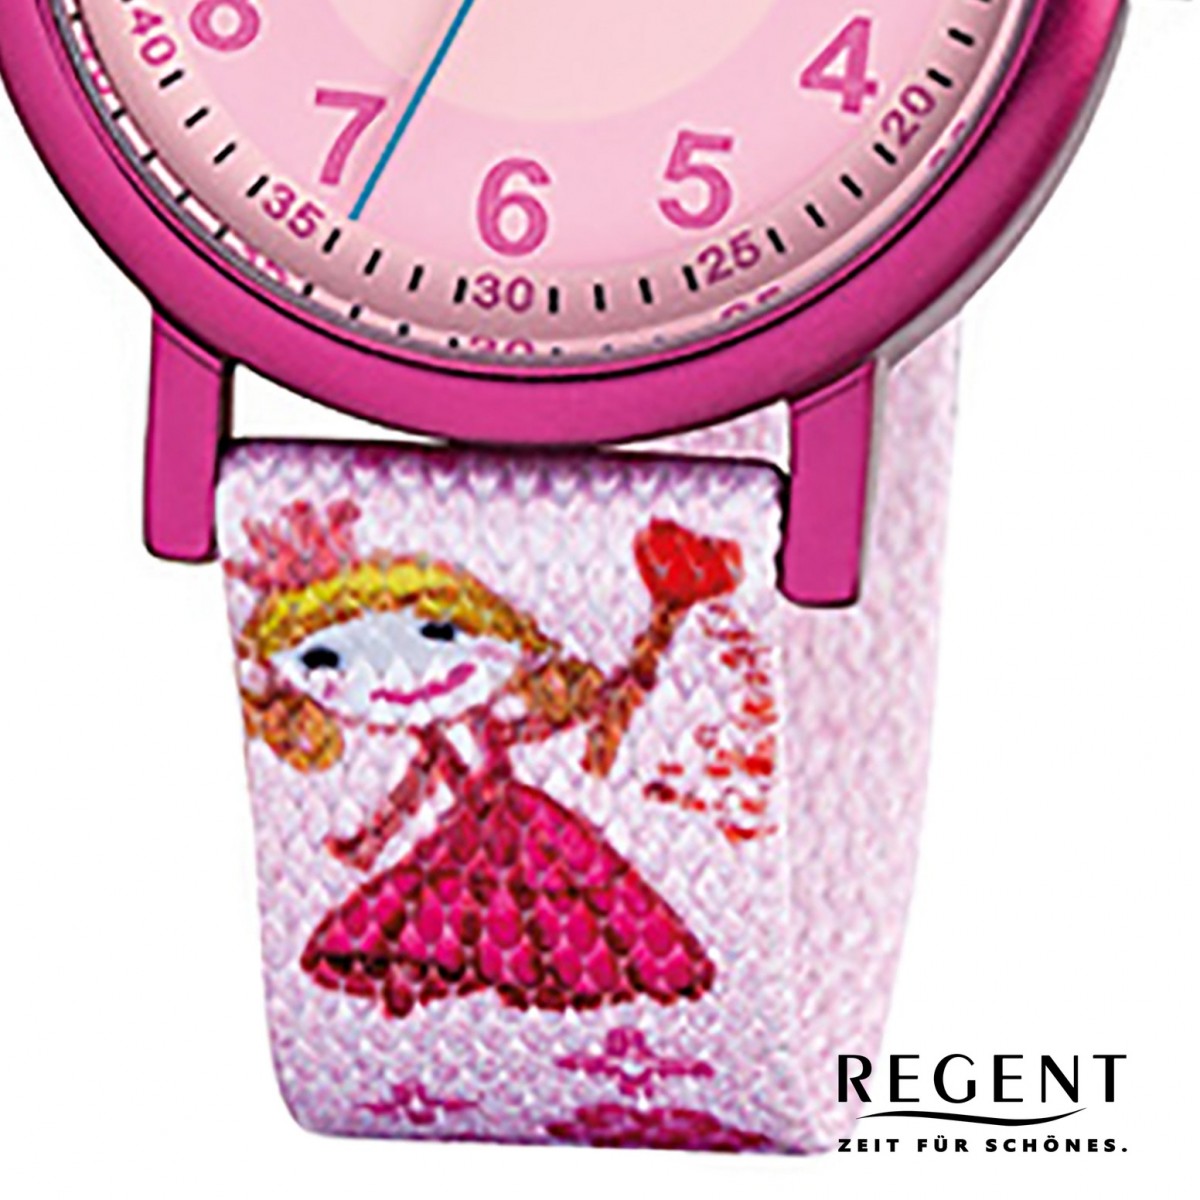 Textil Regent URF949 Prinzessin Mineralglas Quarz rosa Kinder-Armbanduhr